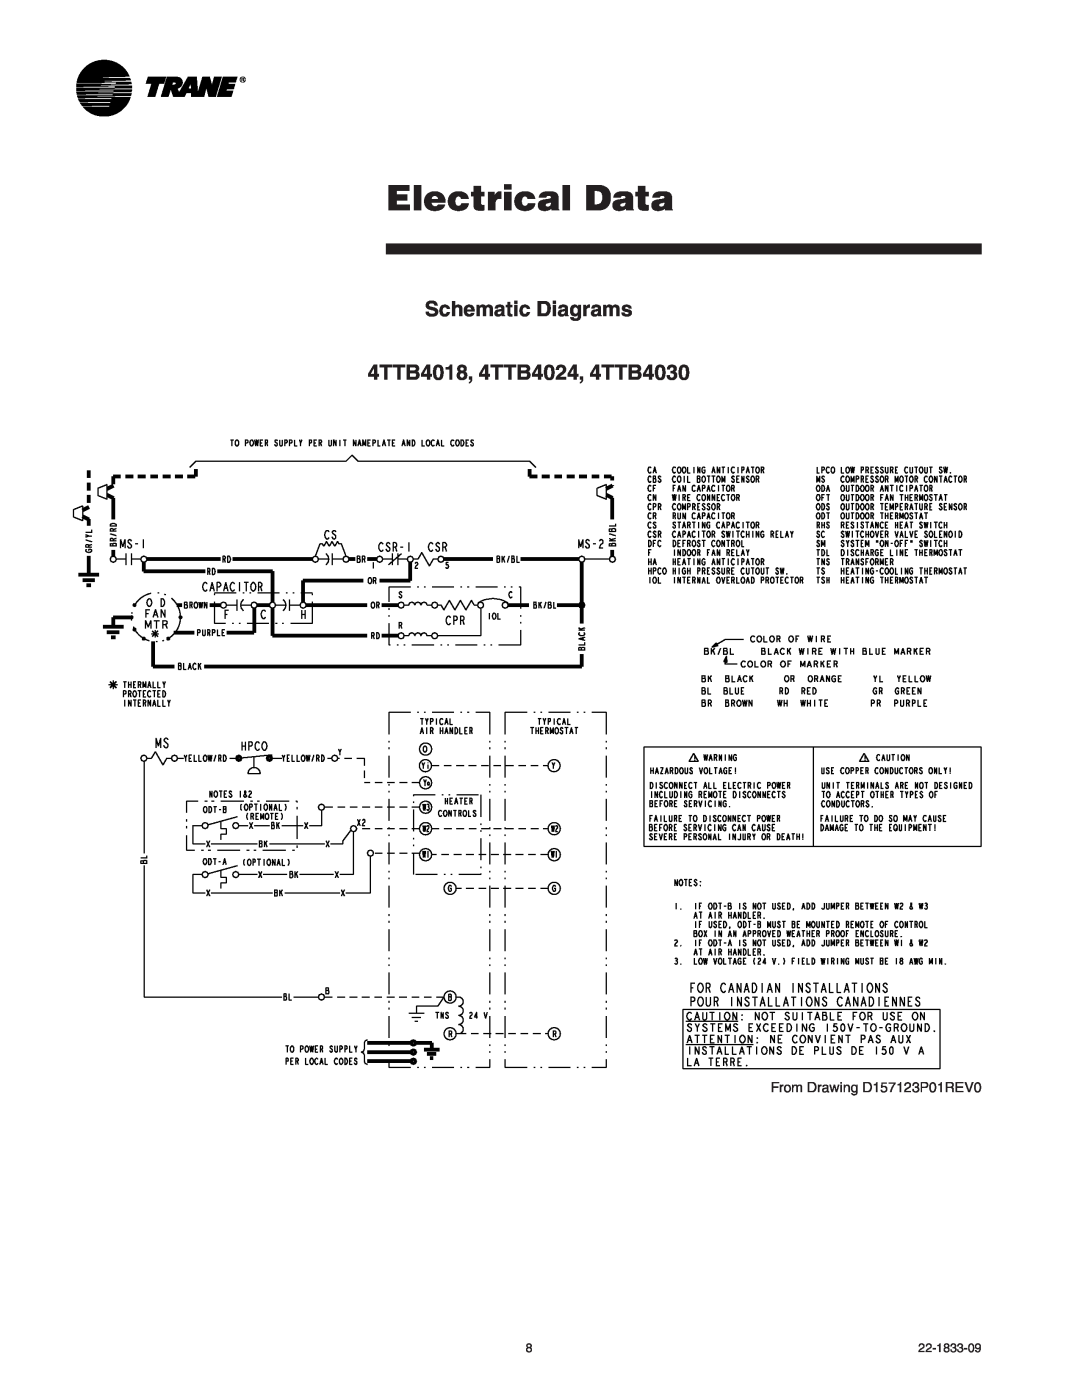 Trane manual Electrical Data, Schematic Diagrams 4TTB4018, 4TTB4024, 4TTB4030 